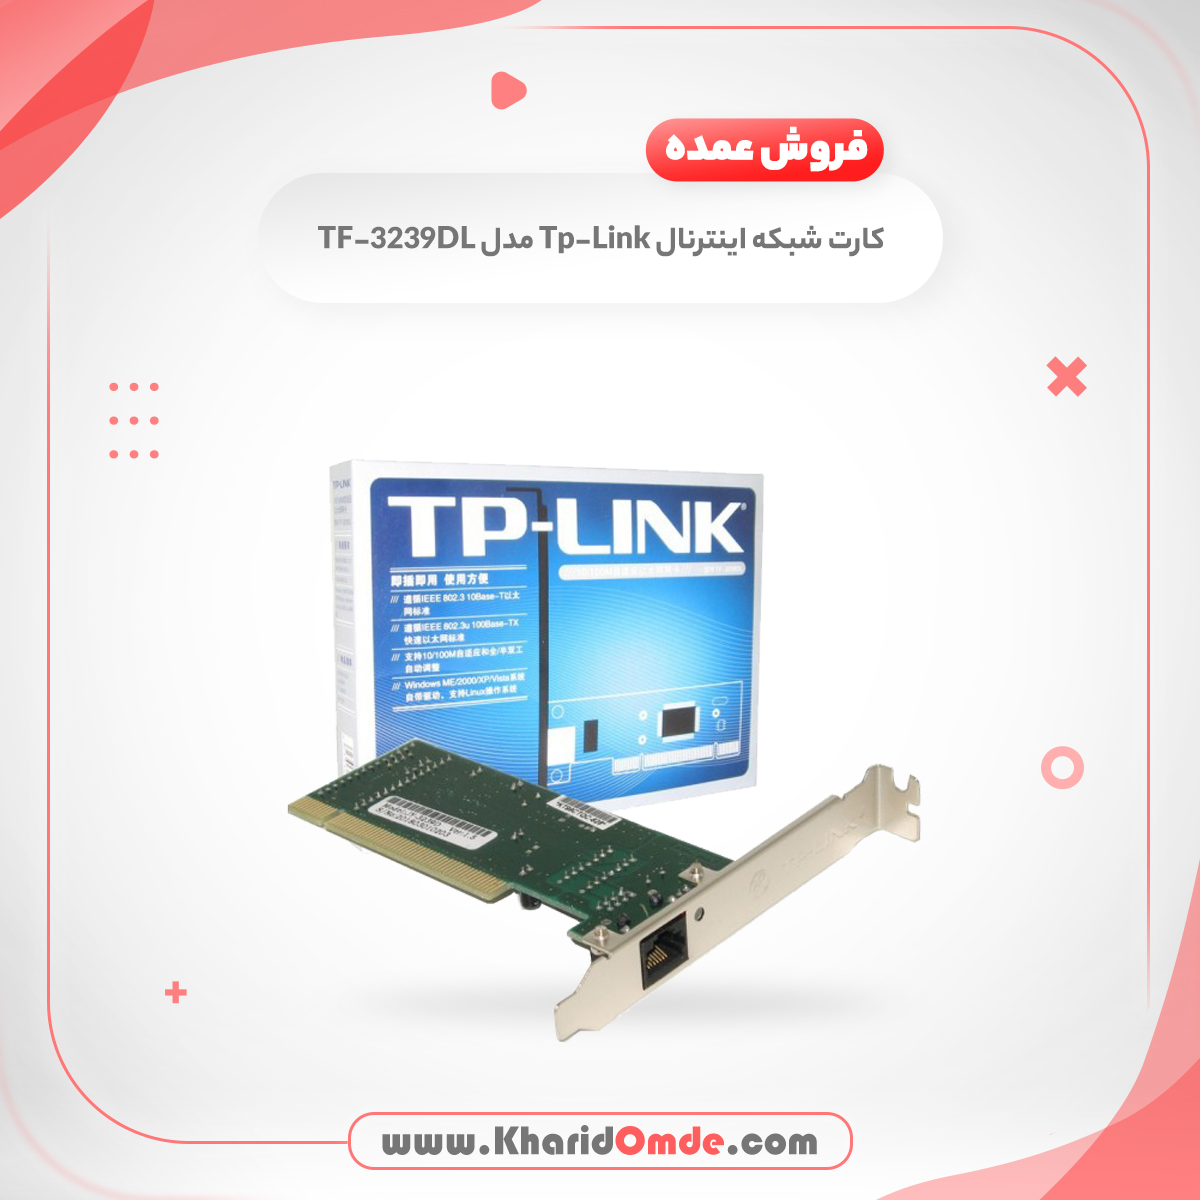 فروش عمده کارت شبکه اینترنال Tp-Link مدل TF-3239DL